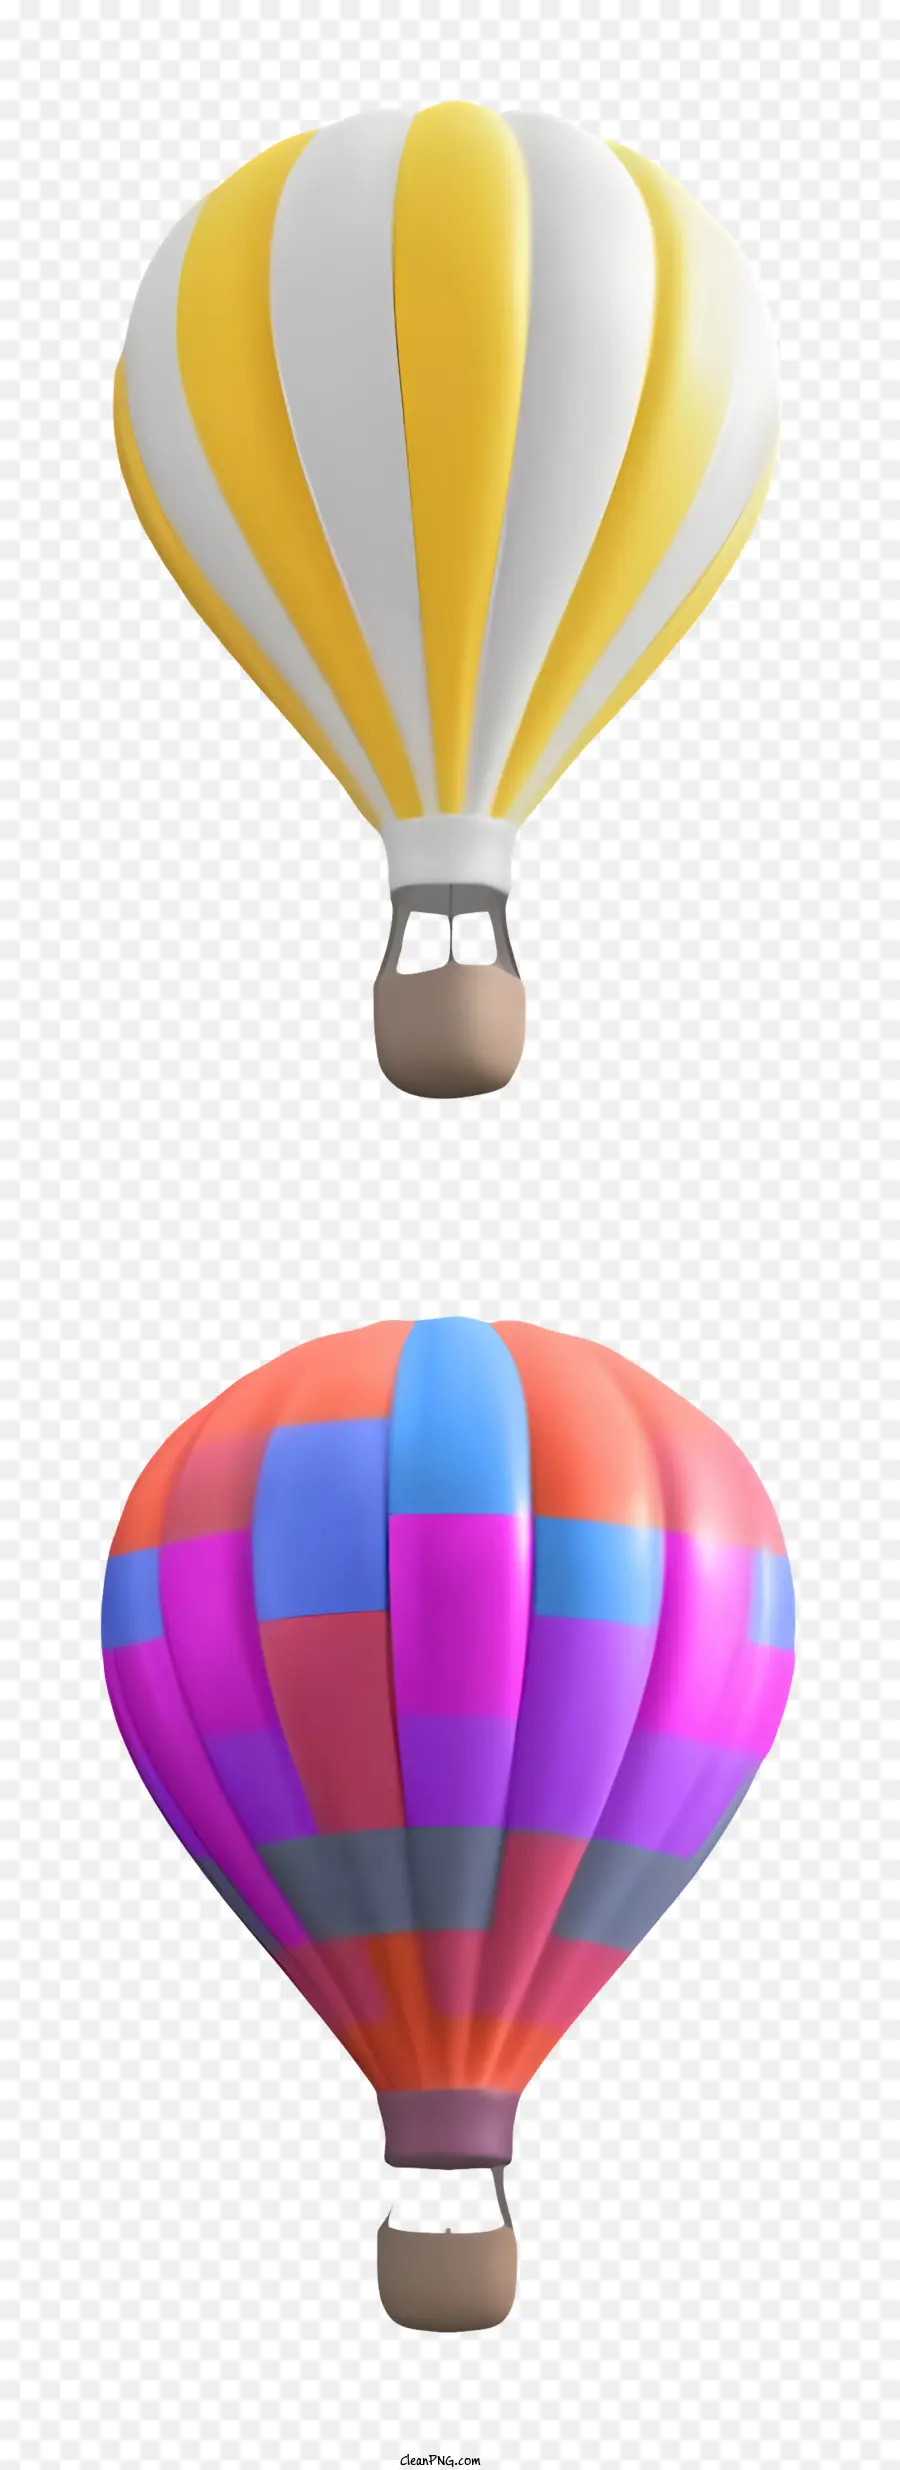 hot air balloons colorful balloons hot air balloon colors contrasting colors balloons floating in the air